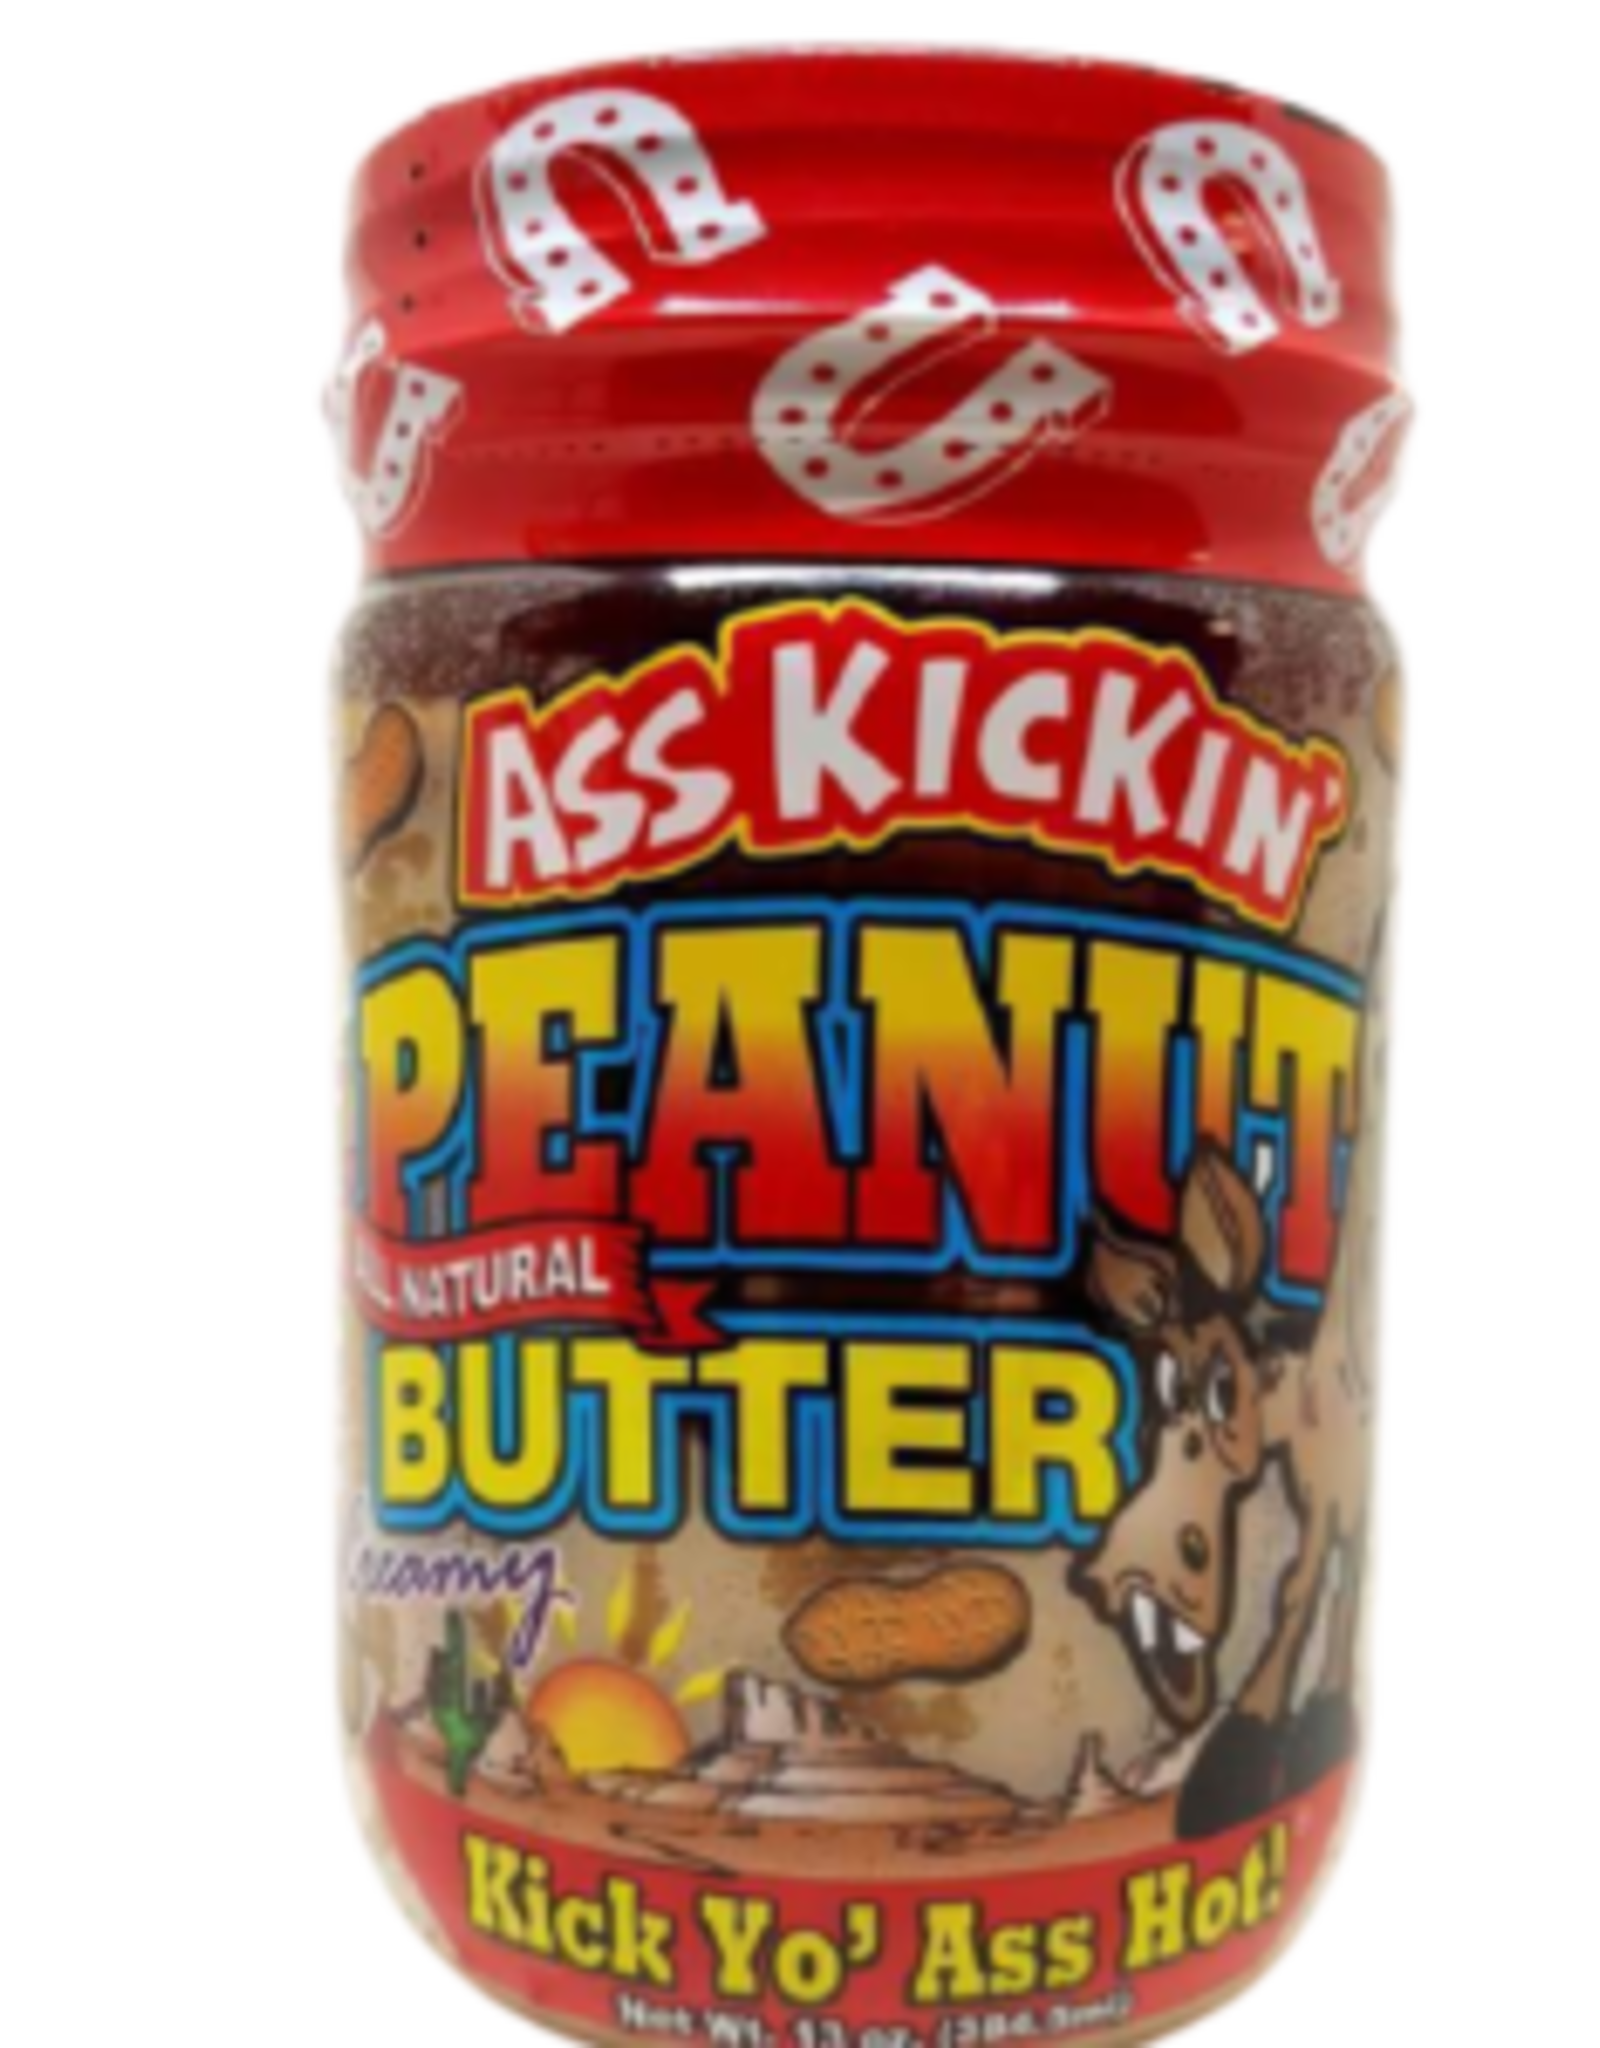 Ass Kickin' Peanut Butter with Habanero